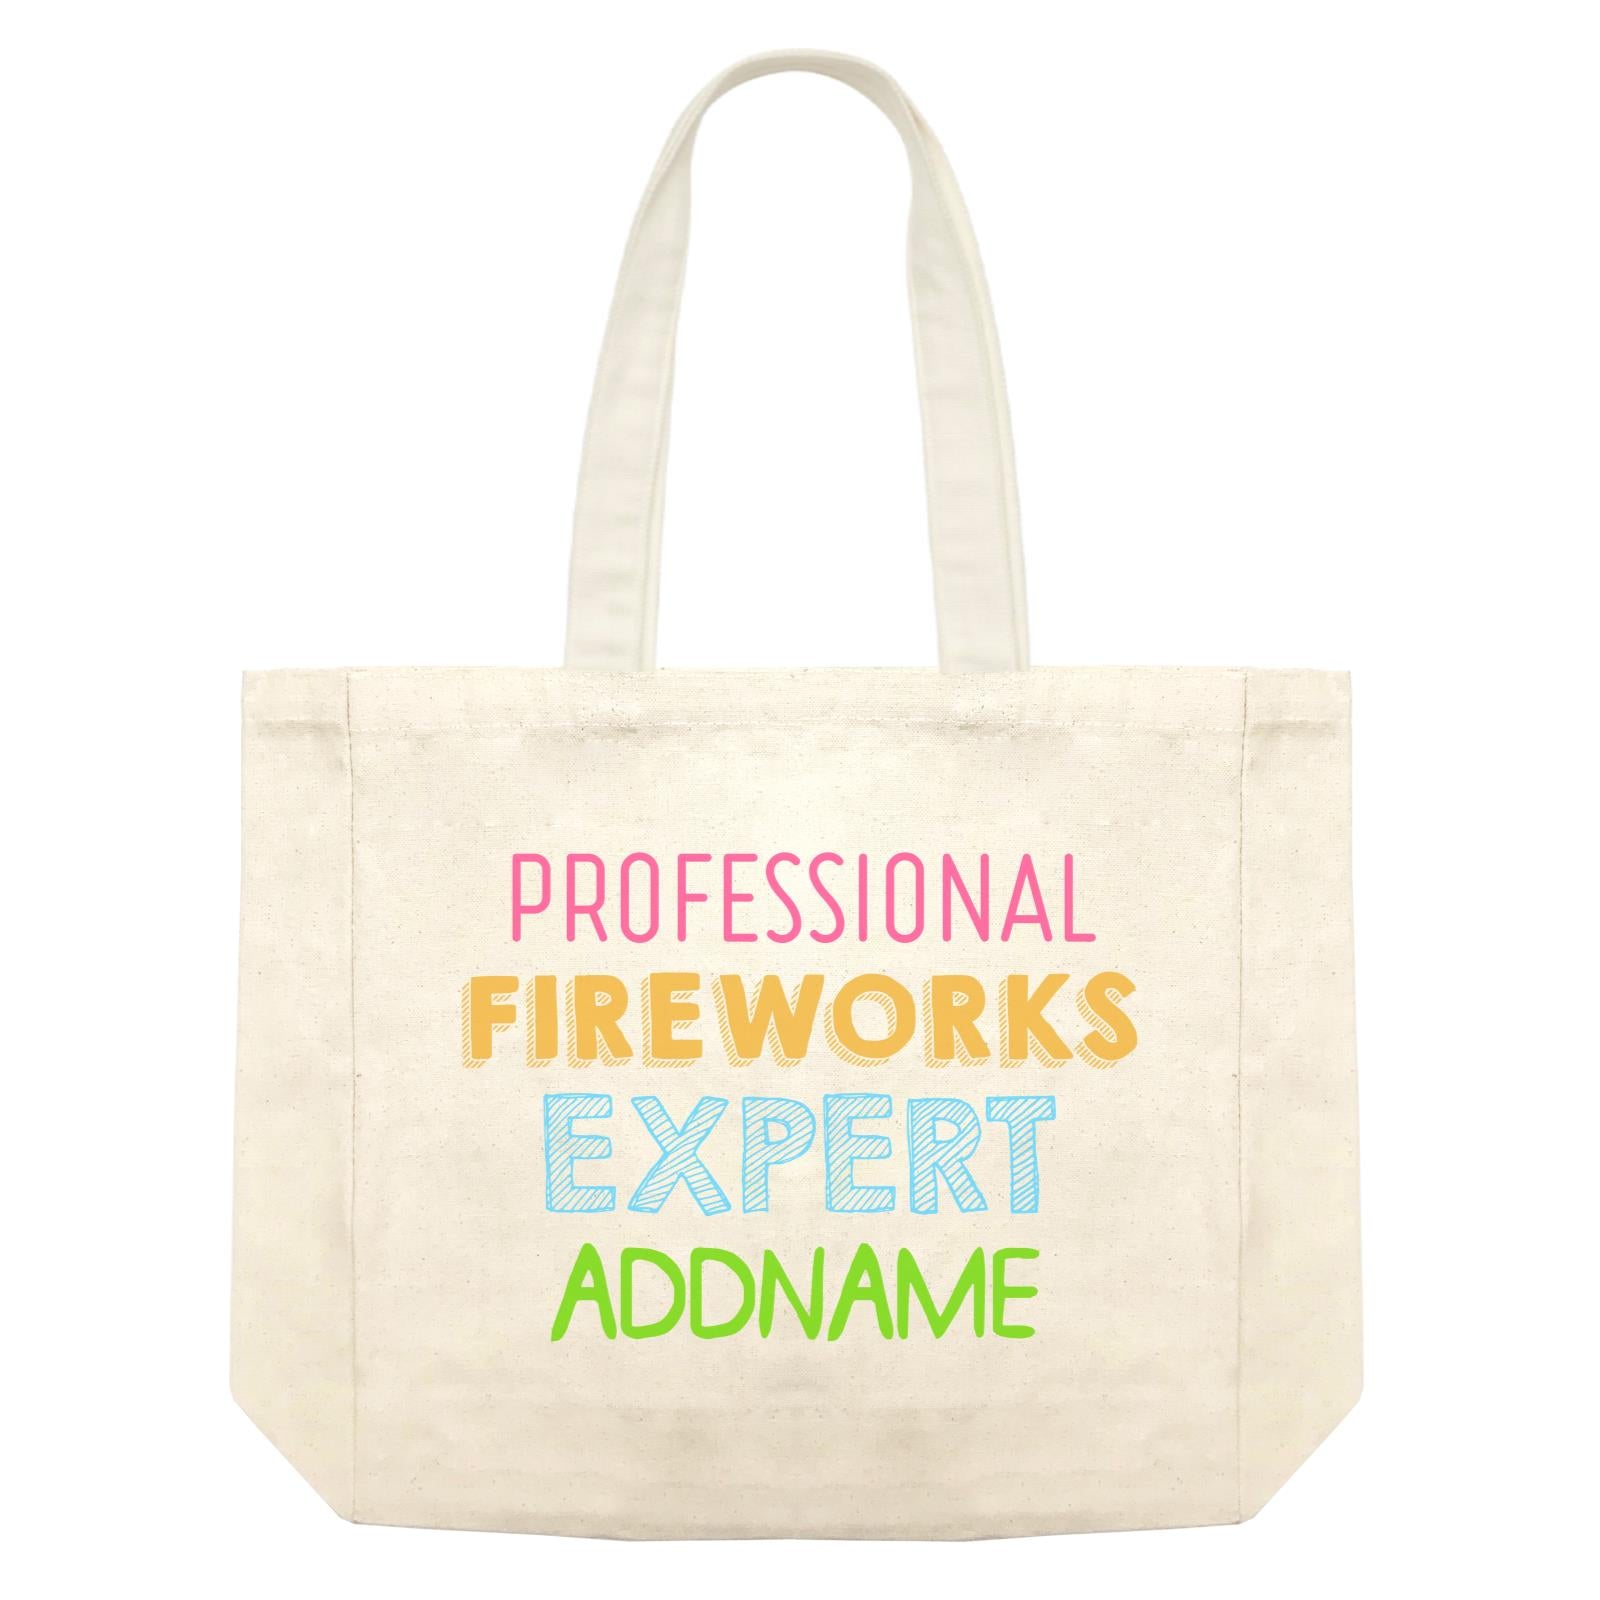 Professional Fireworks Expert Addname Shopping Bag